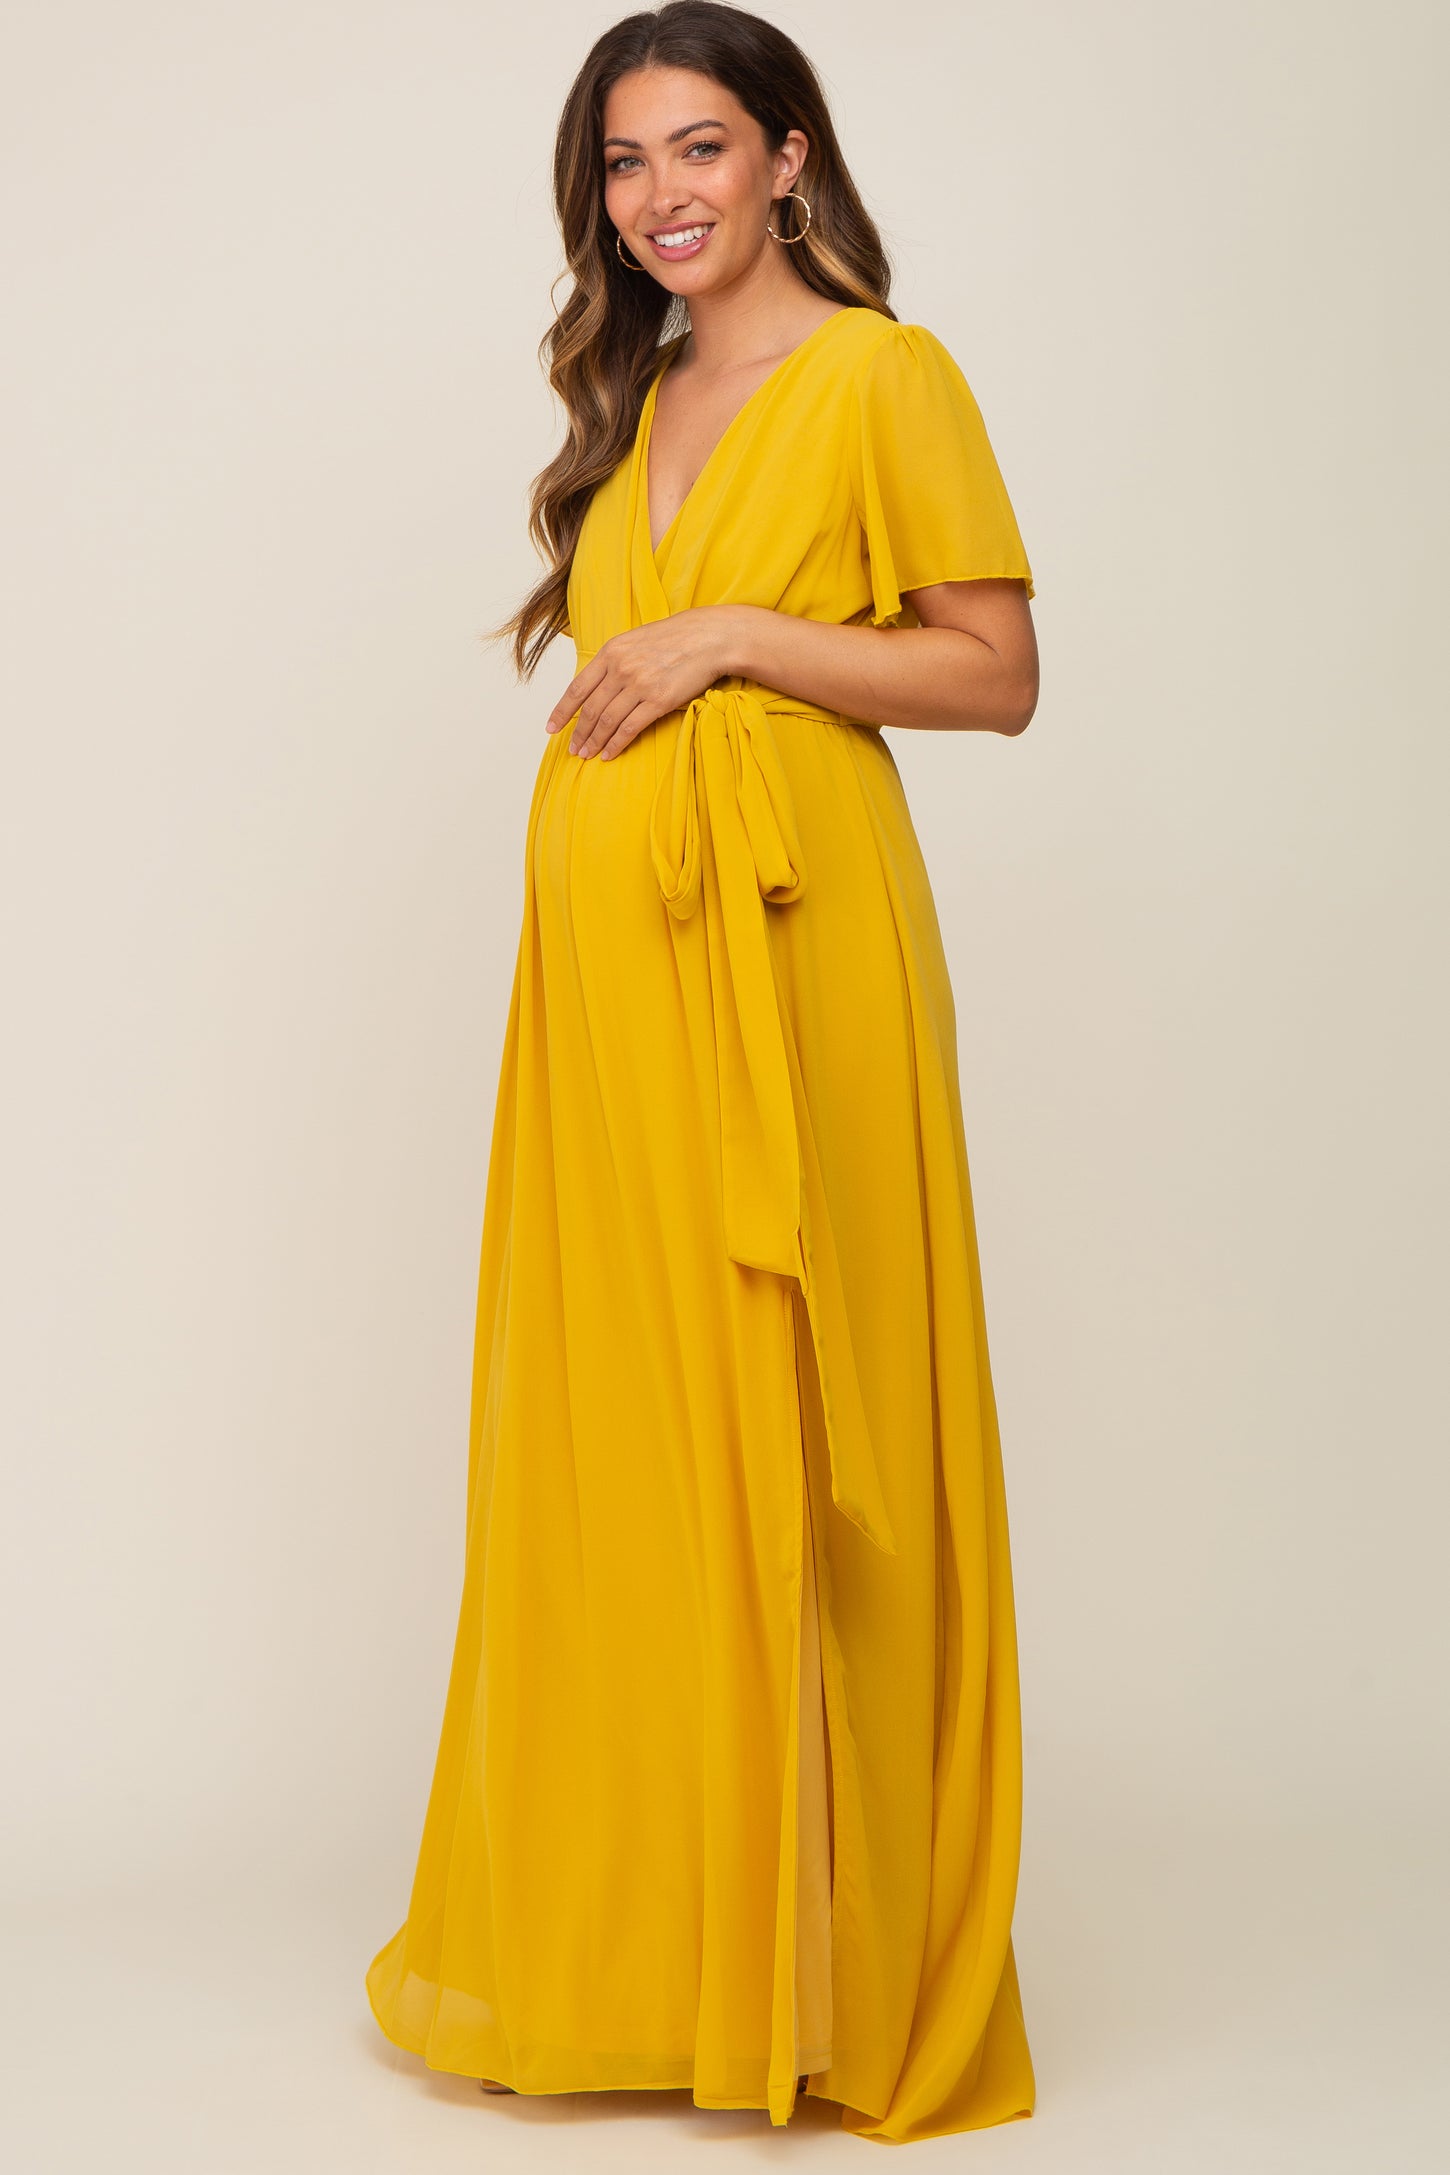 Yellow Chiffon Short Sleeve Wrap V-Neck Front Slit Maternity Maxi Dress